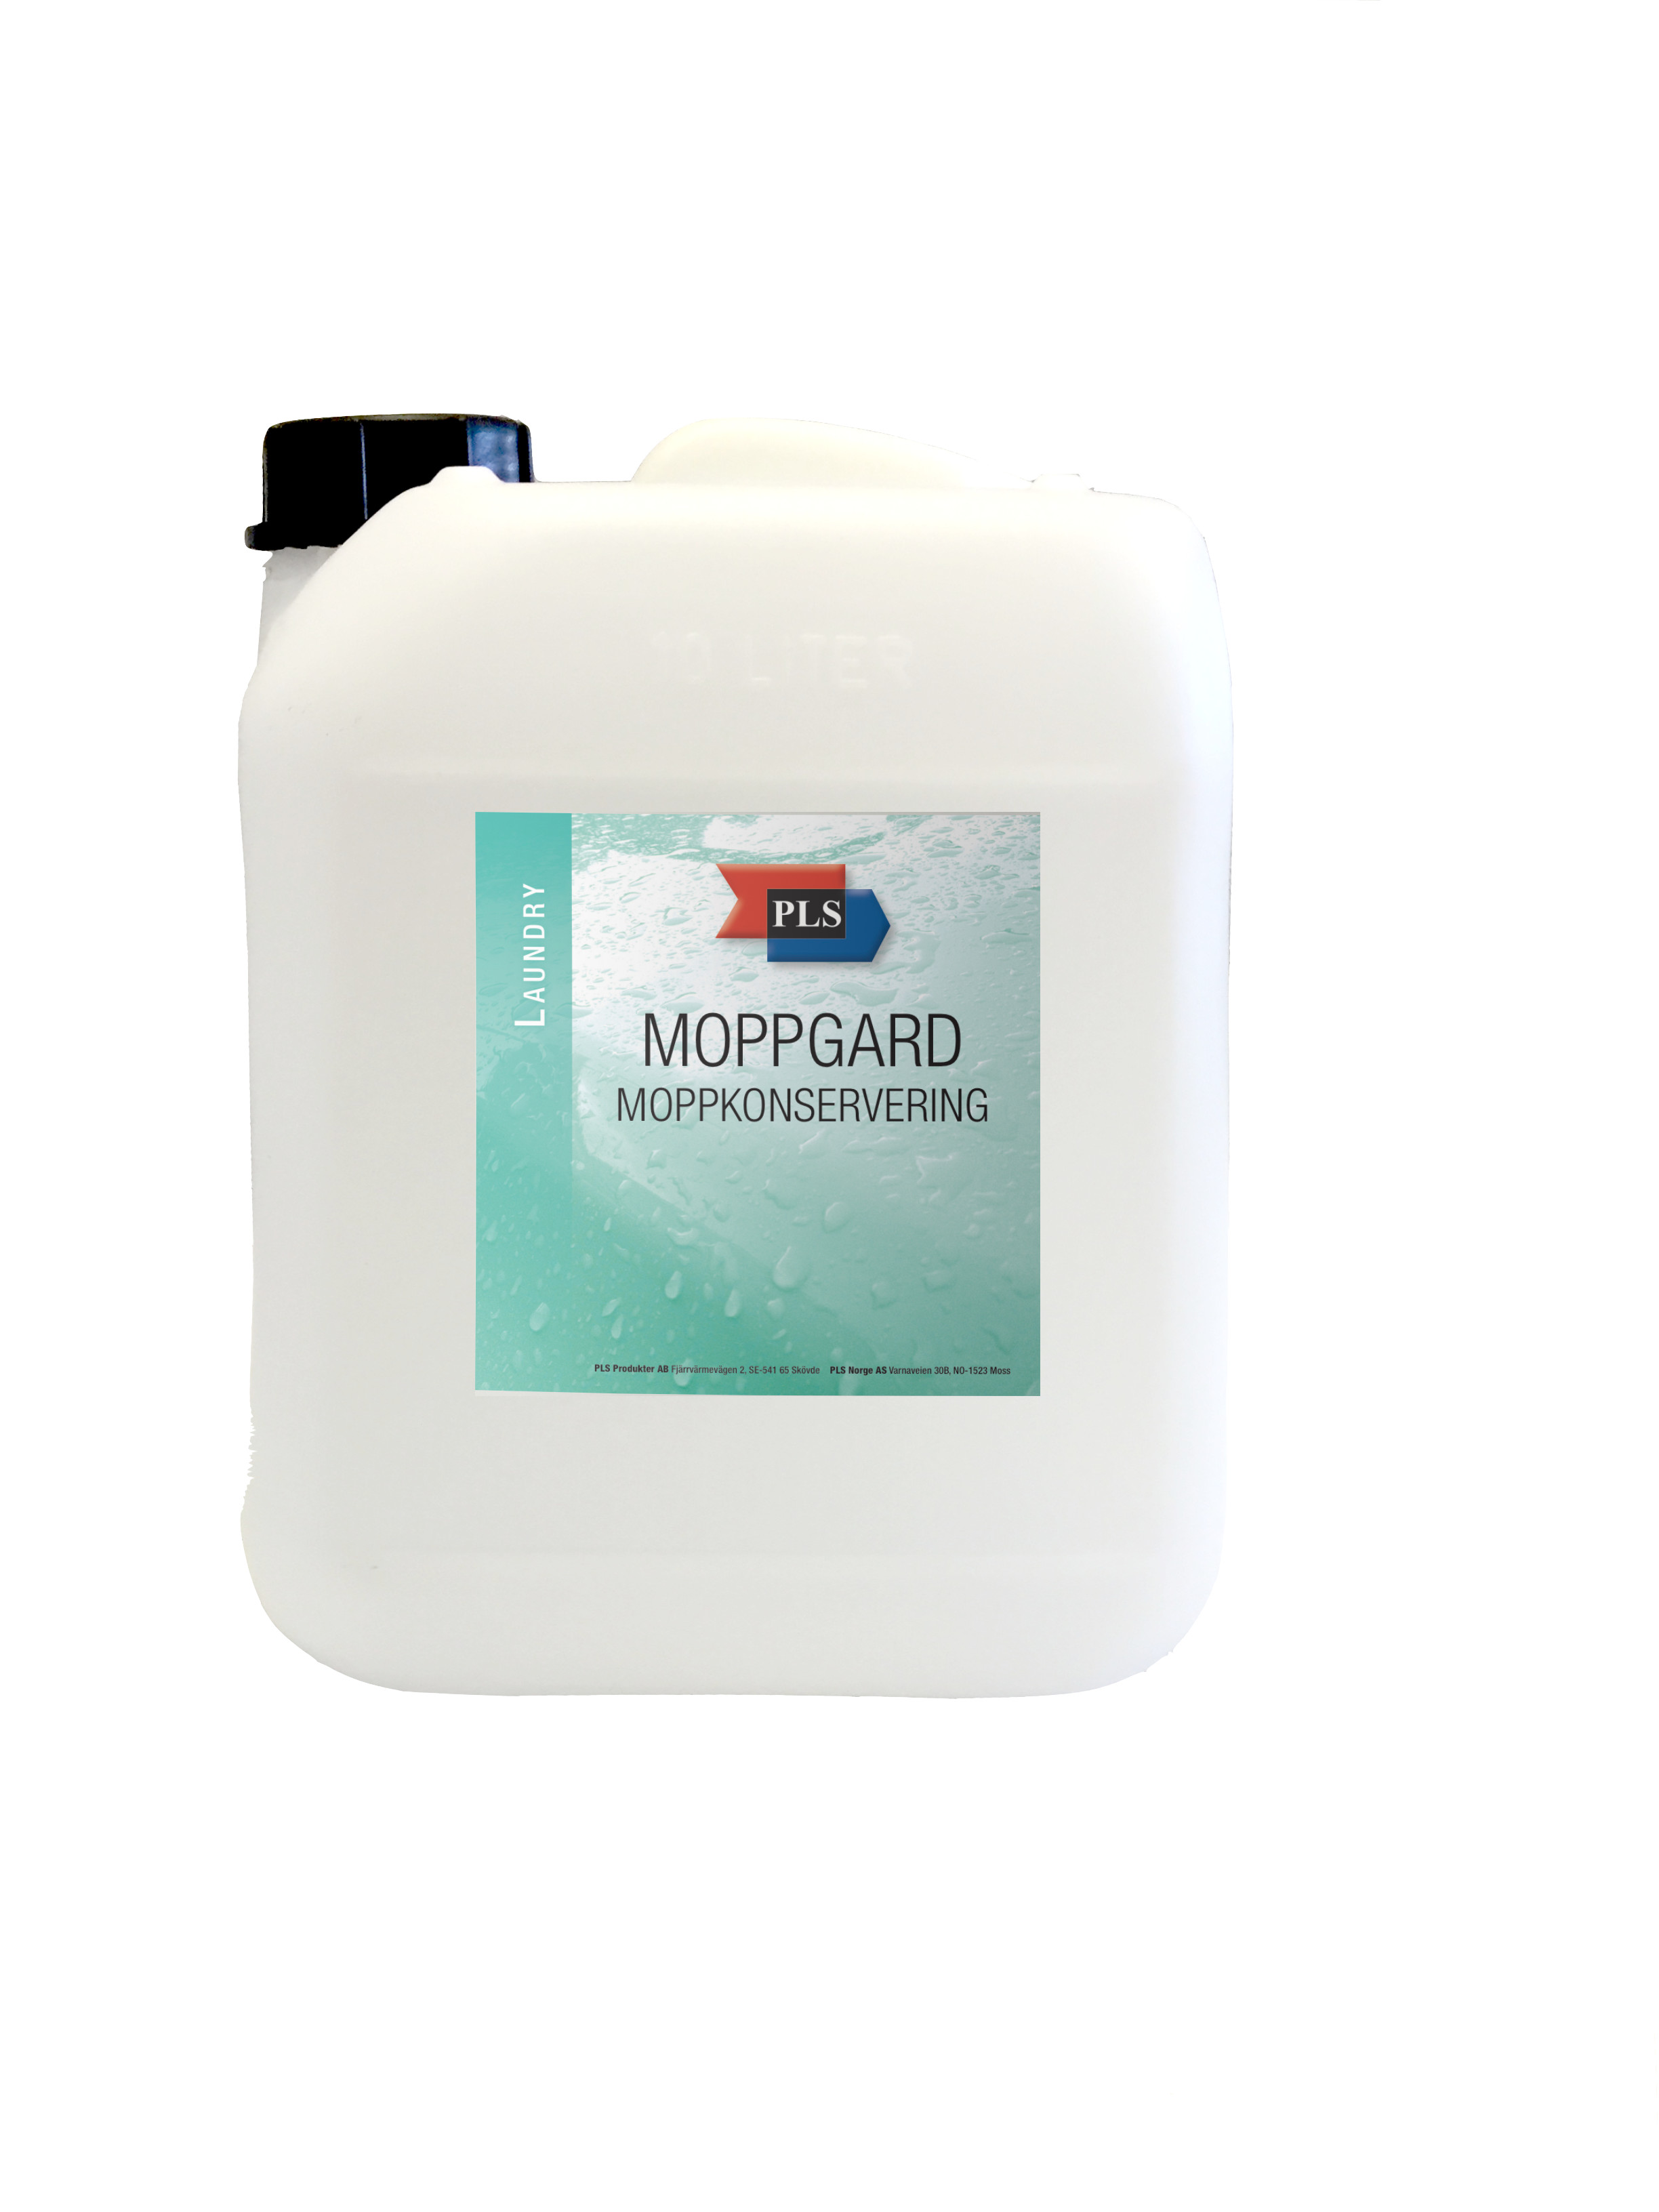 PLS Moppgard 10L Moppkonserveringsmedel